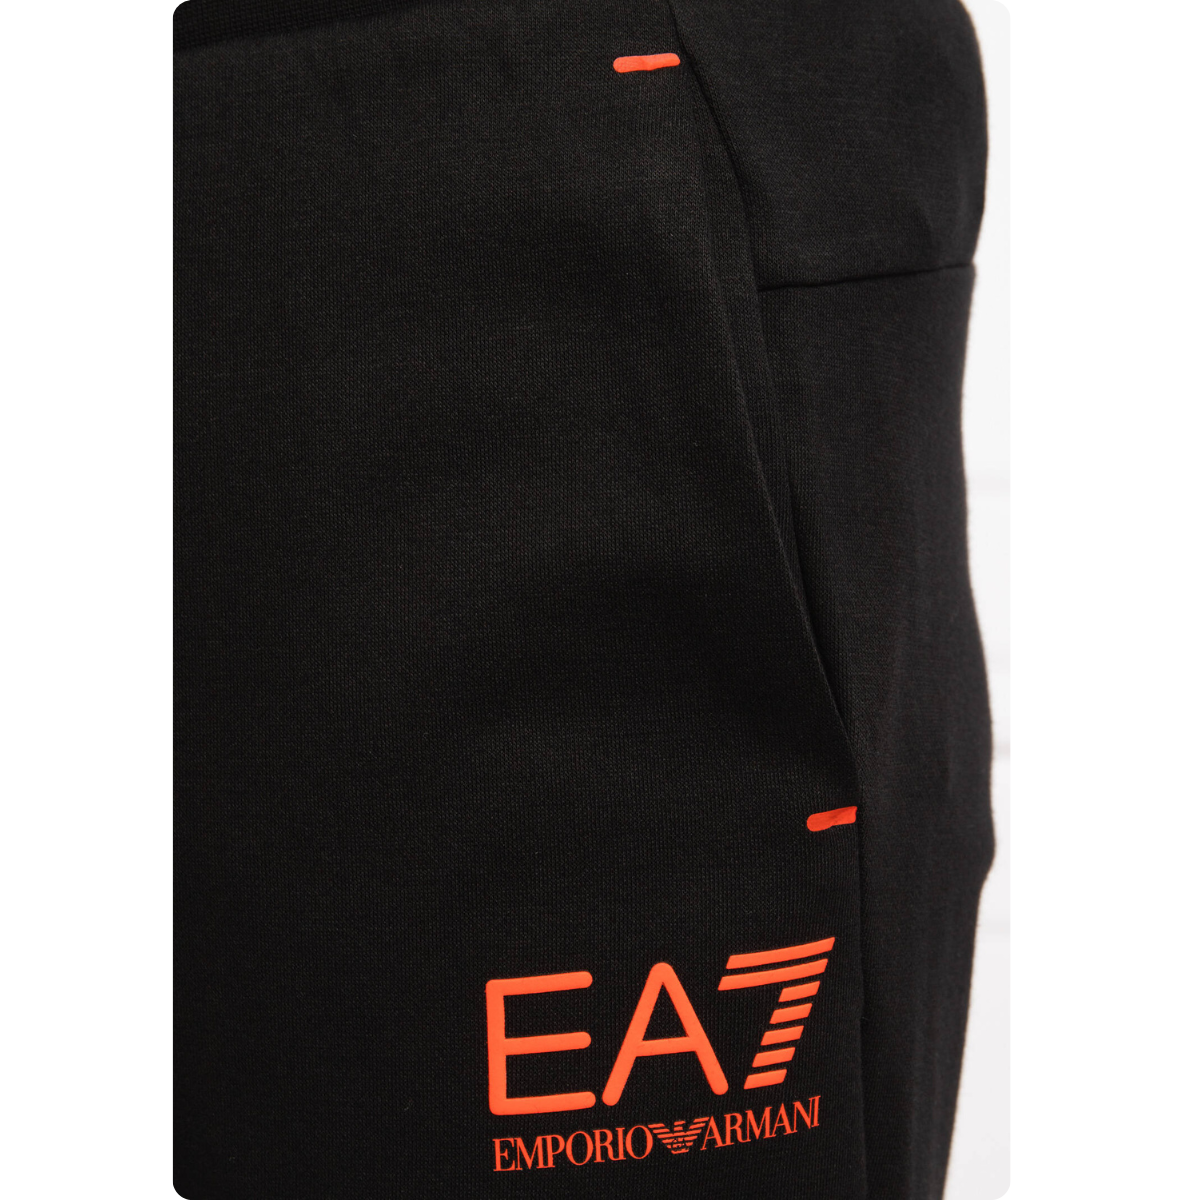 EA7 Emporio Armani - Tracksuit - Black